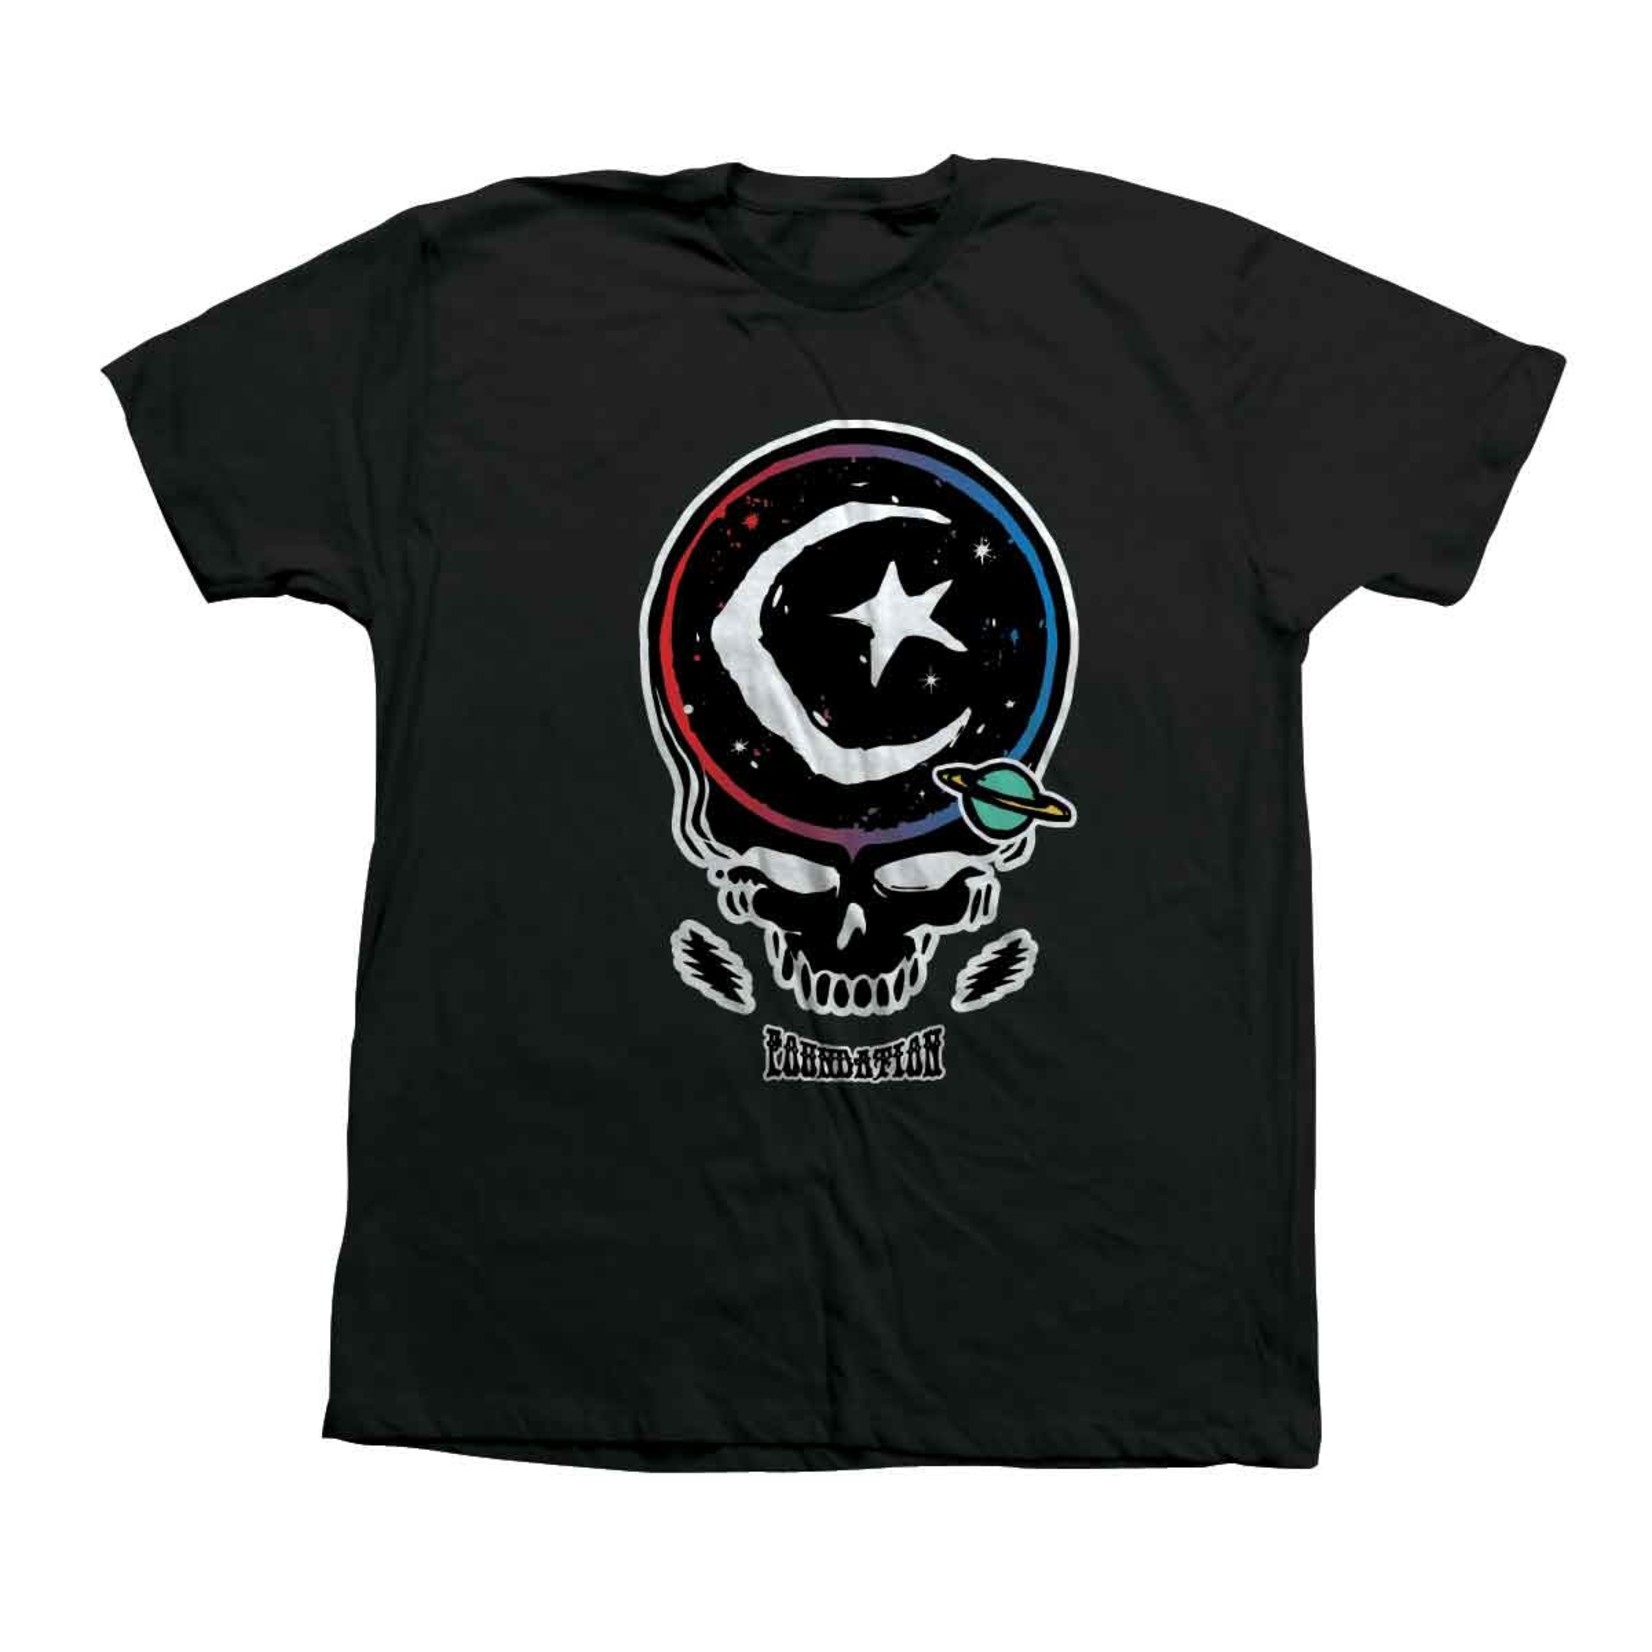 foundation Foundation Cosmic Voyage T-Shirt - Black